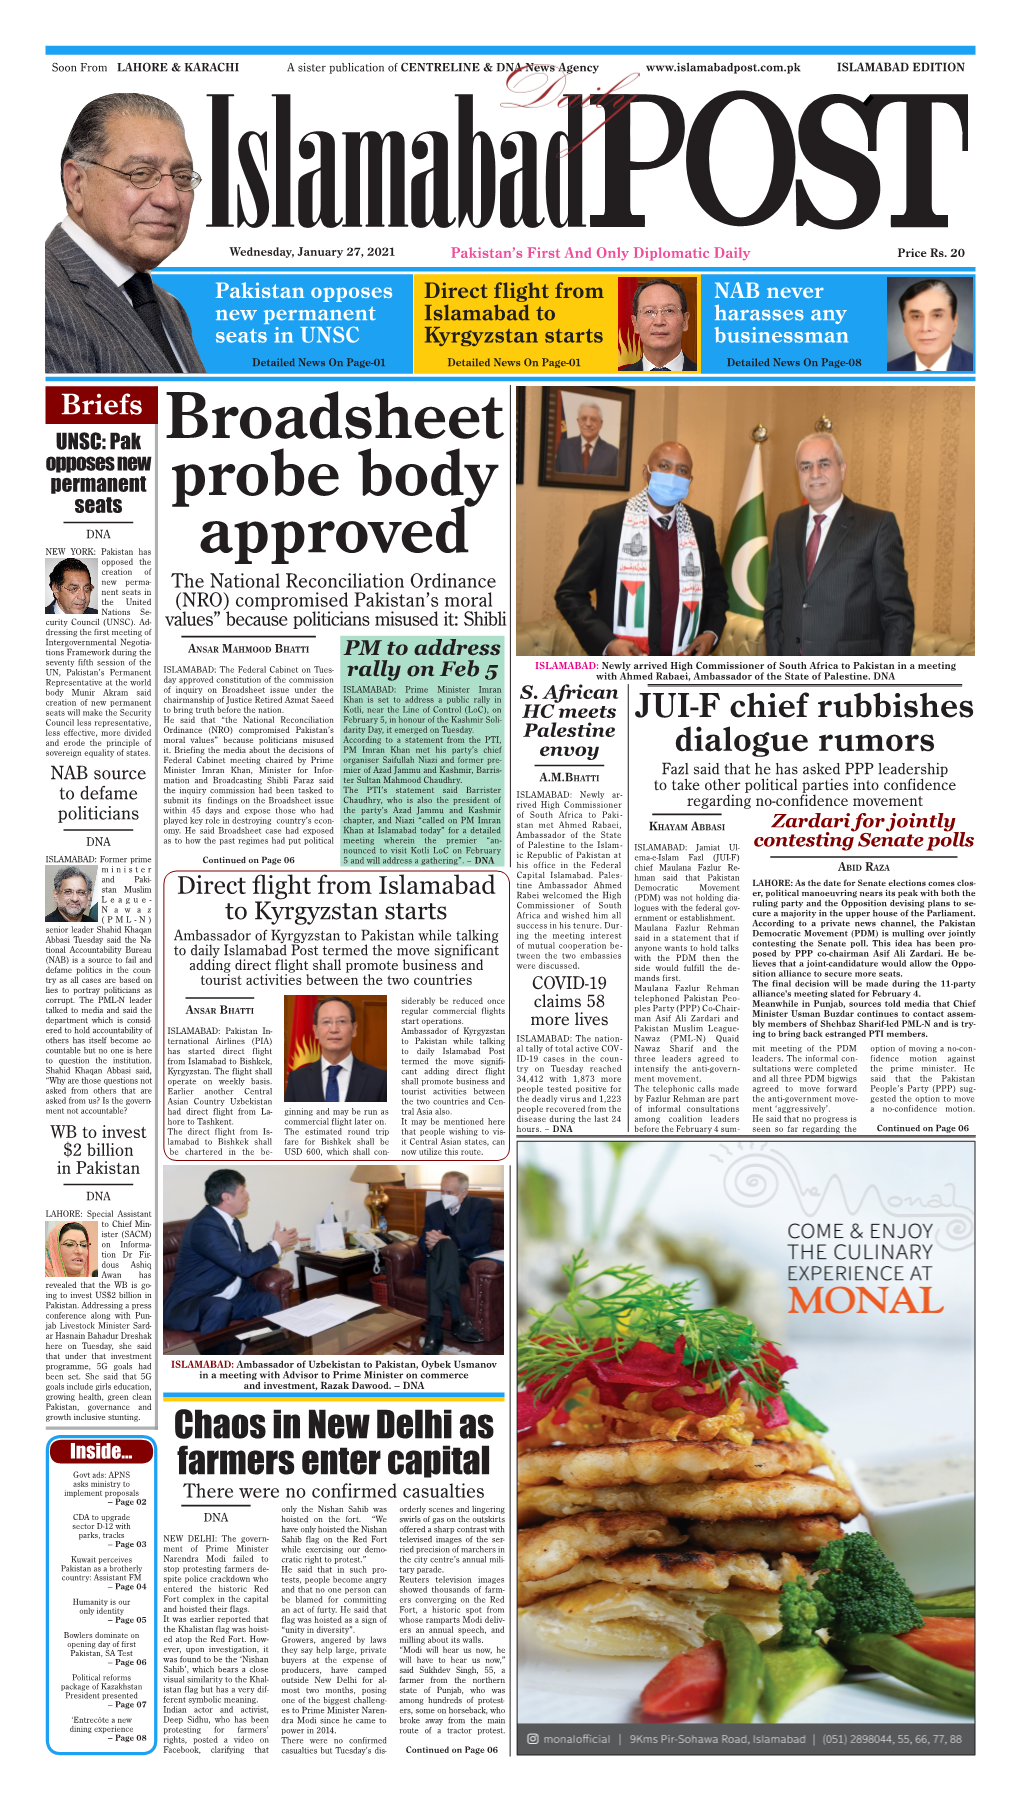 Briefs Broadsheet Probe Body Approved